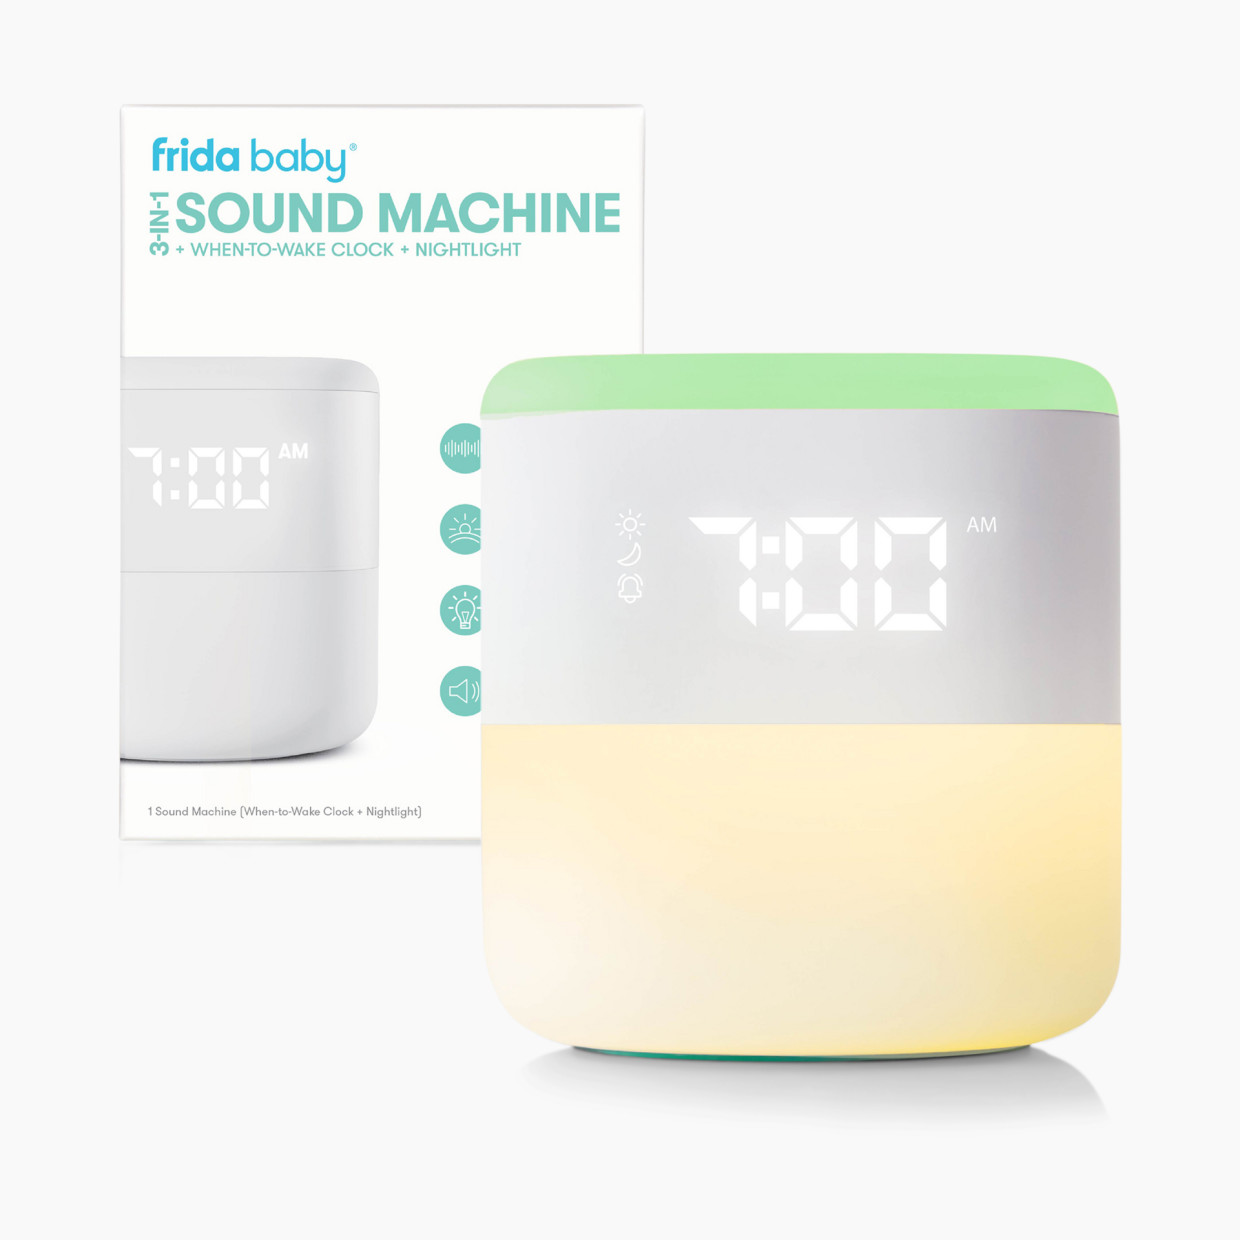 FridaBaby 3-in-1 Sound Machine & When-To-Wake Clock & Nightlight.